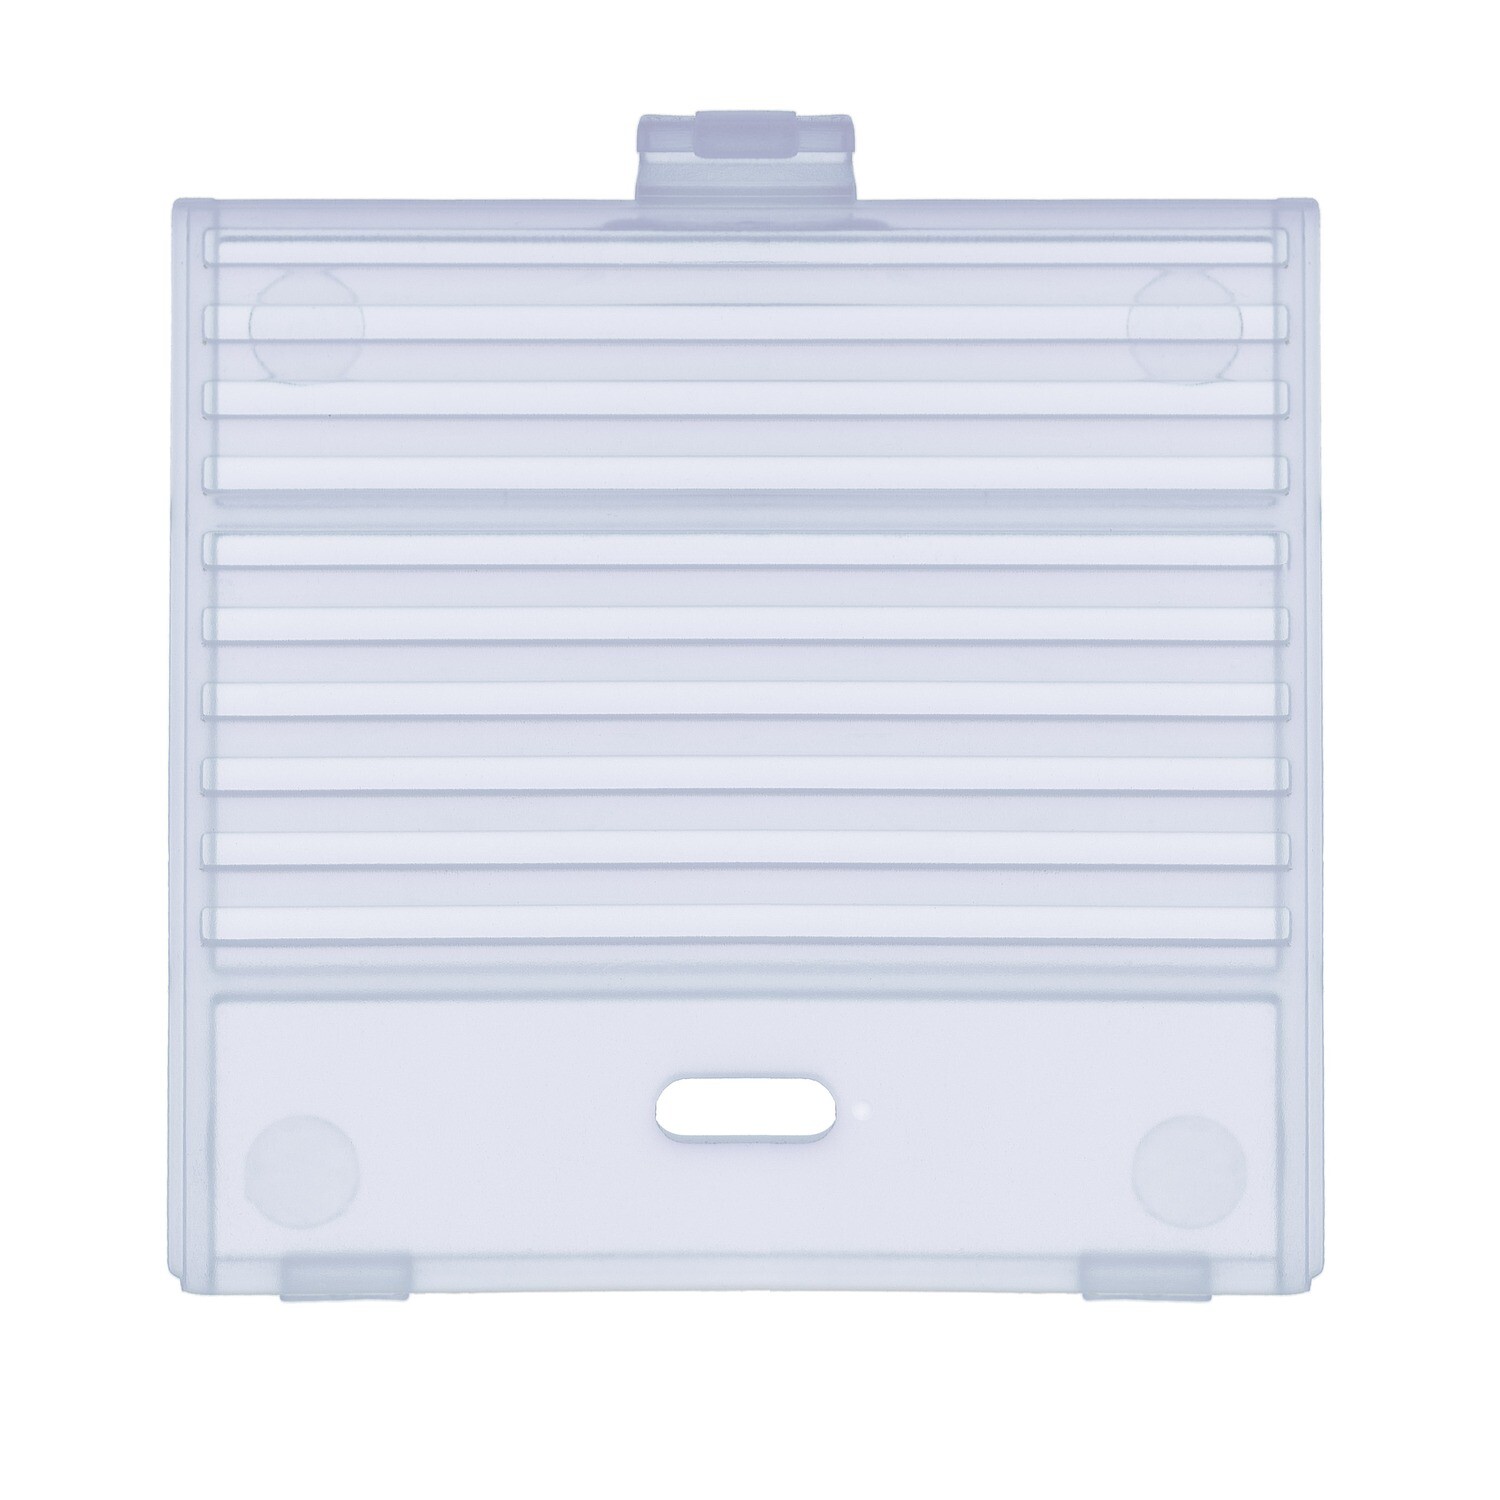 Game Boy Original USB-C Battery Cover (Clear Blue)